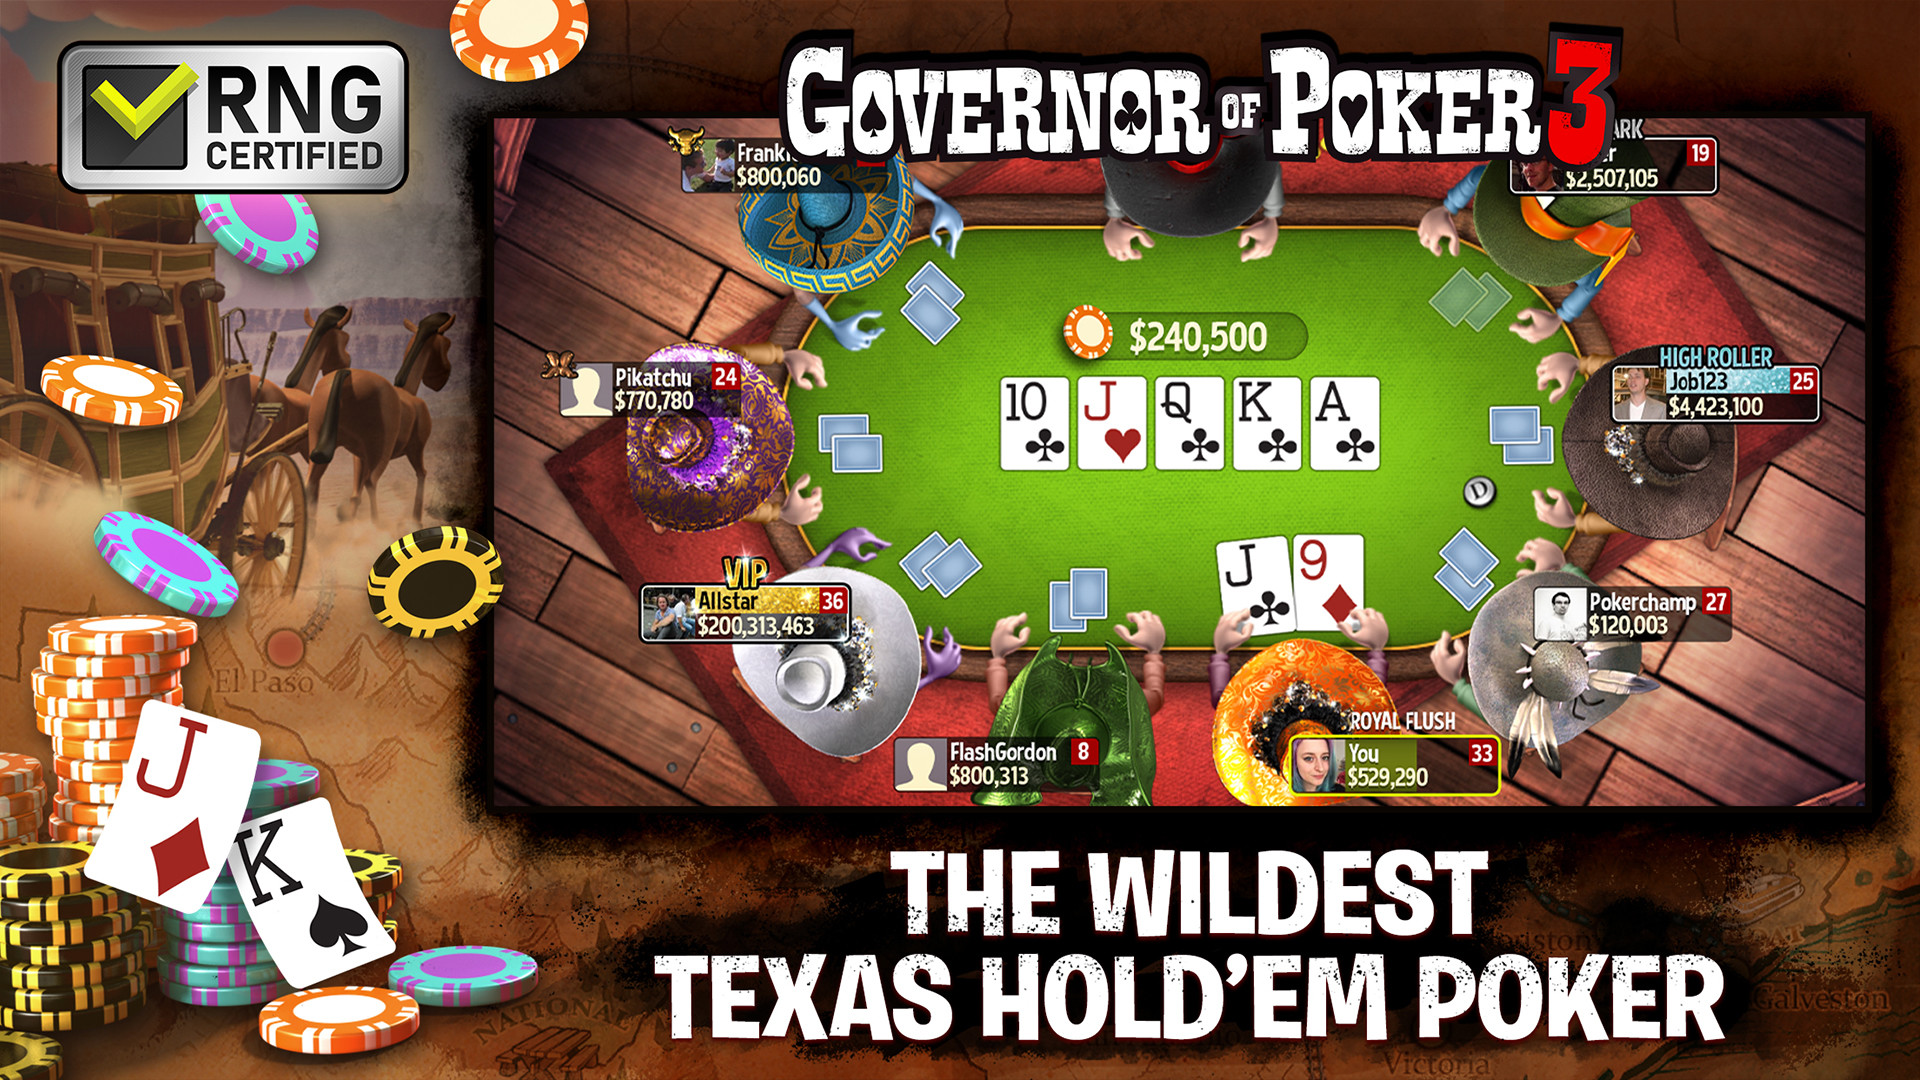 governor of poker 3 offline full version free download